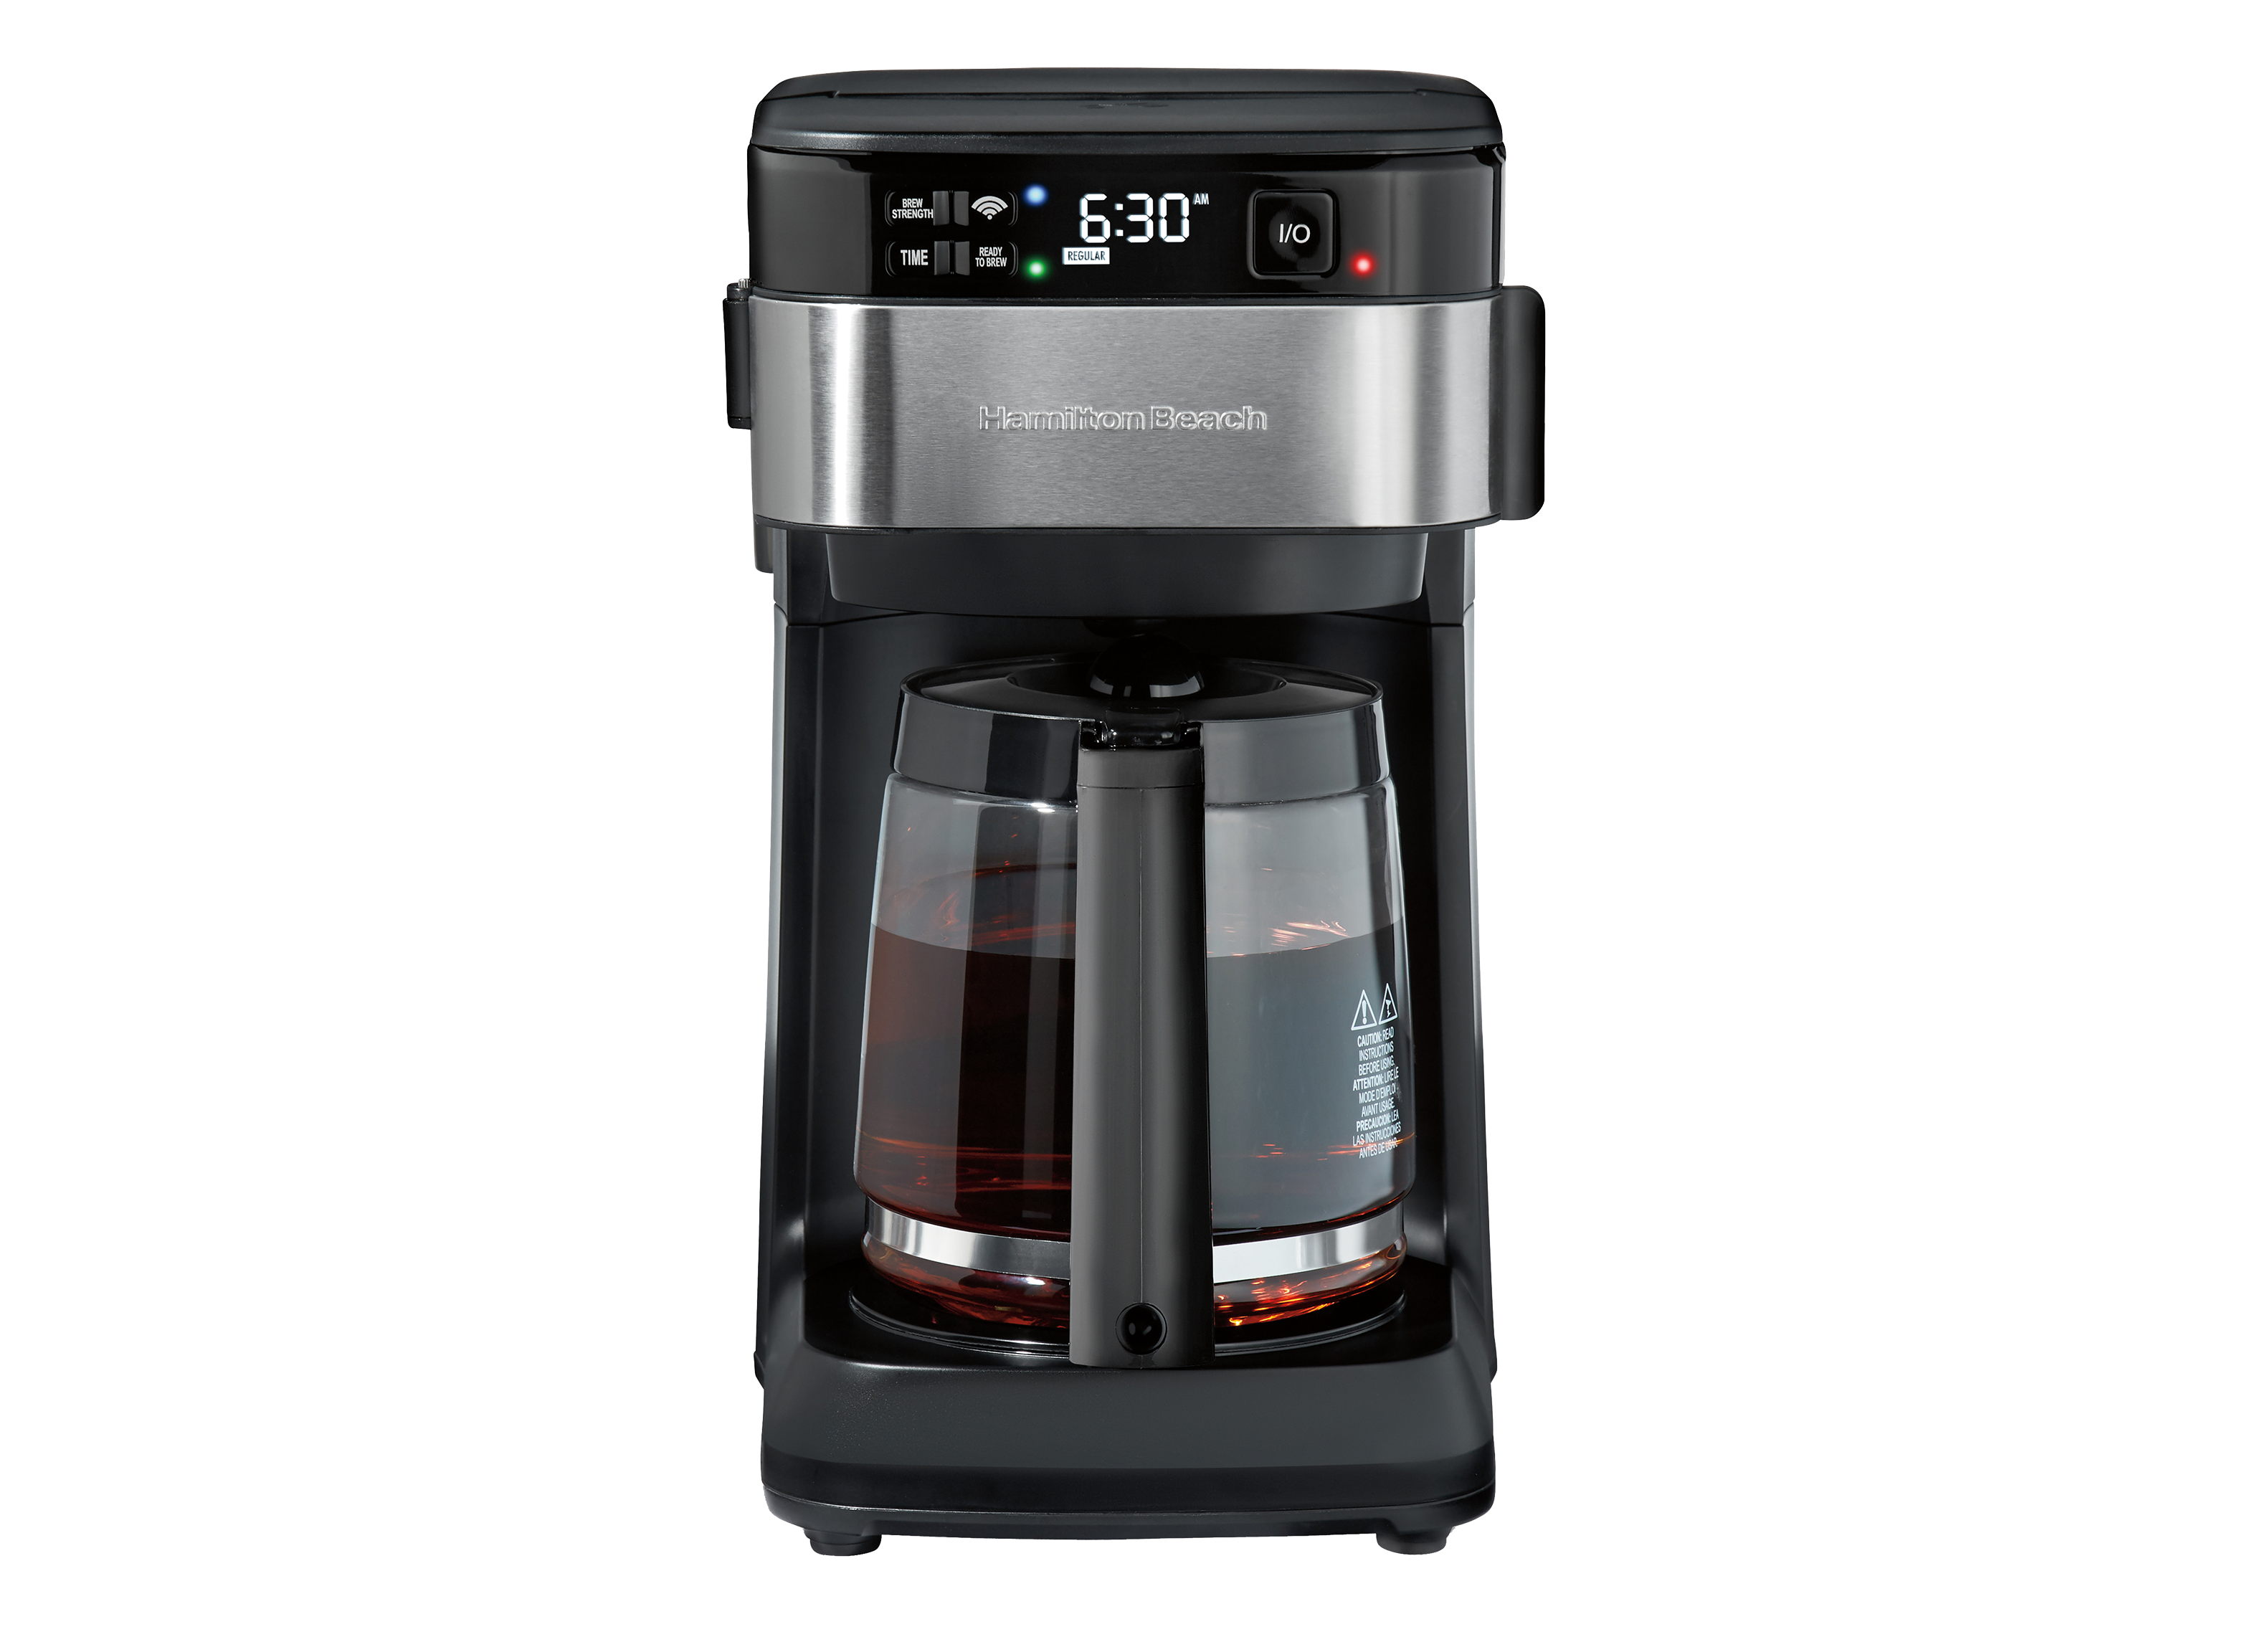 Hamilton Beach Programmable Alexa Smart 49350 Coffee Maker Review -  Consumer Reports